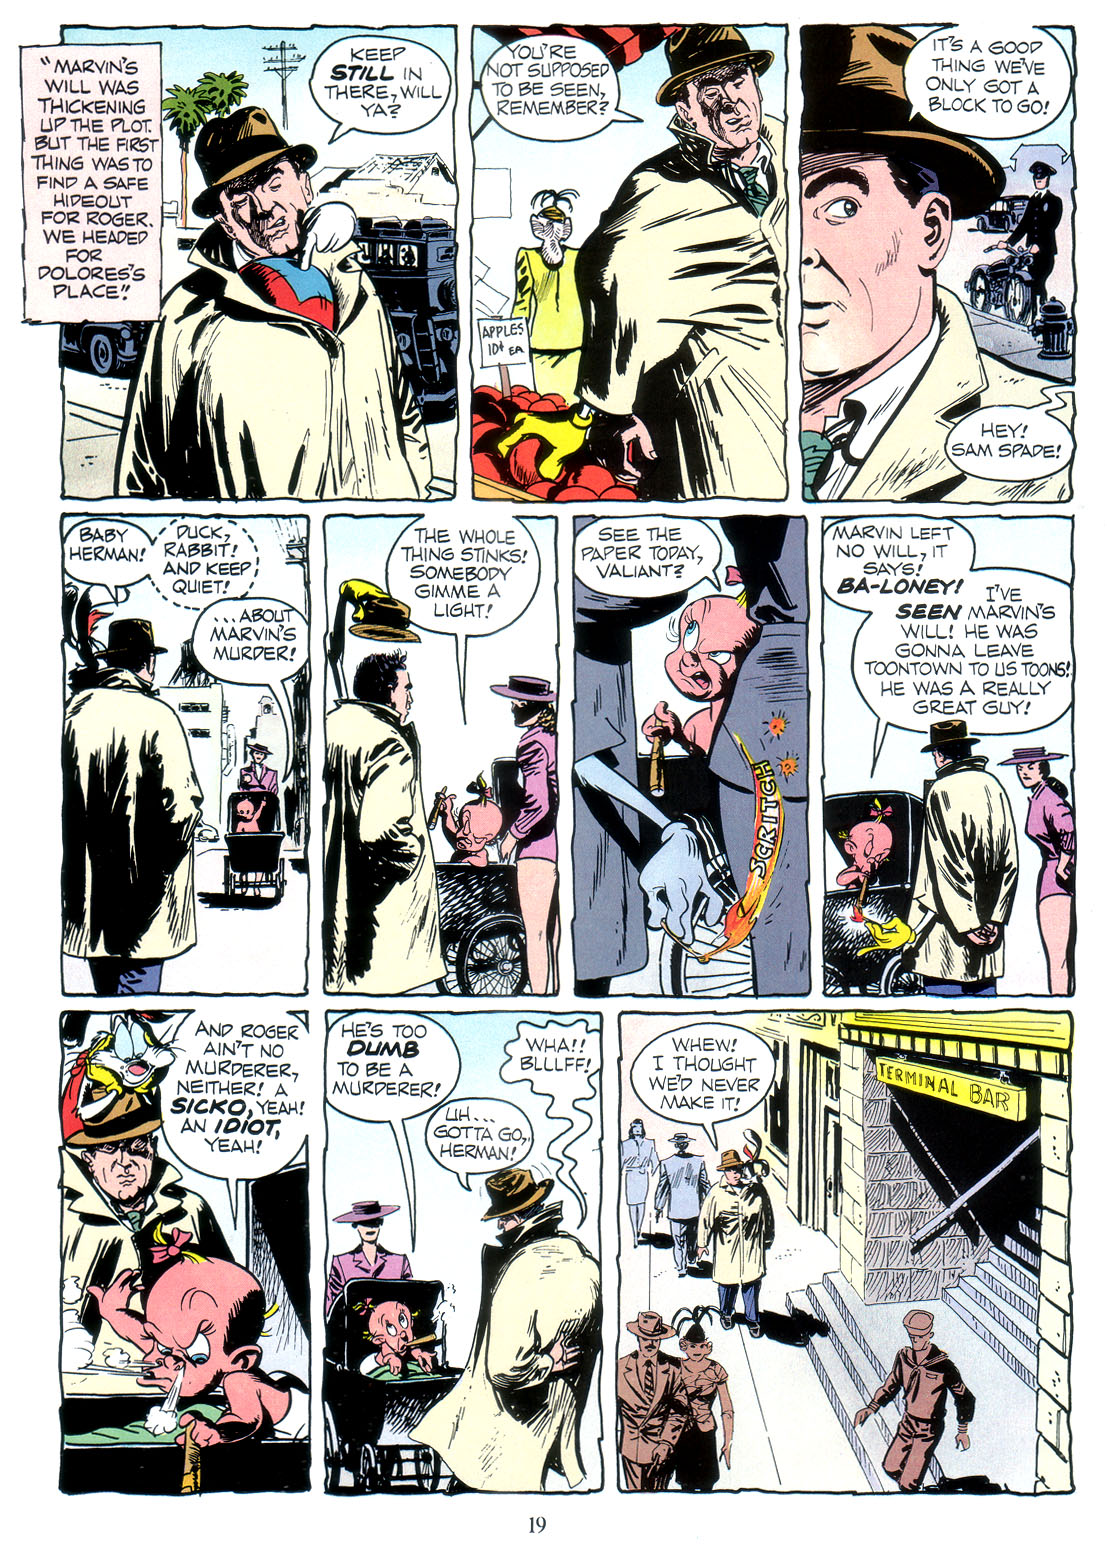 Marvel Graphic Novel issue 41 - Who Framed Roger Rabbit - Page 21